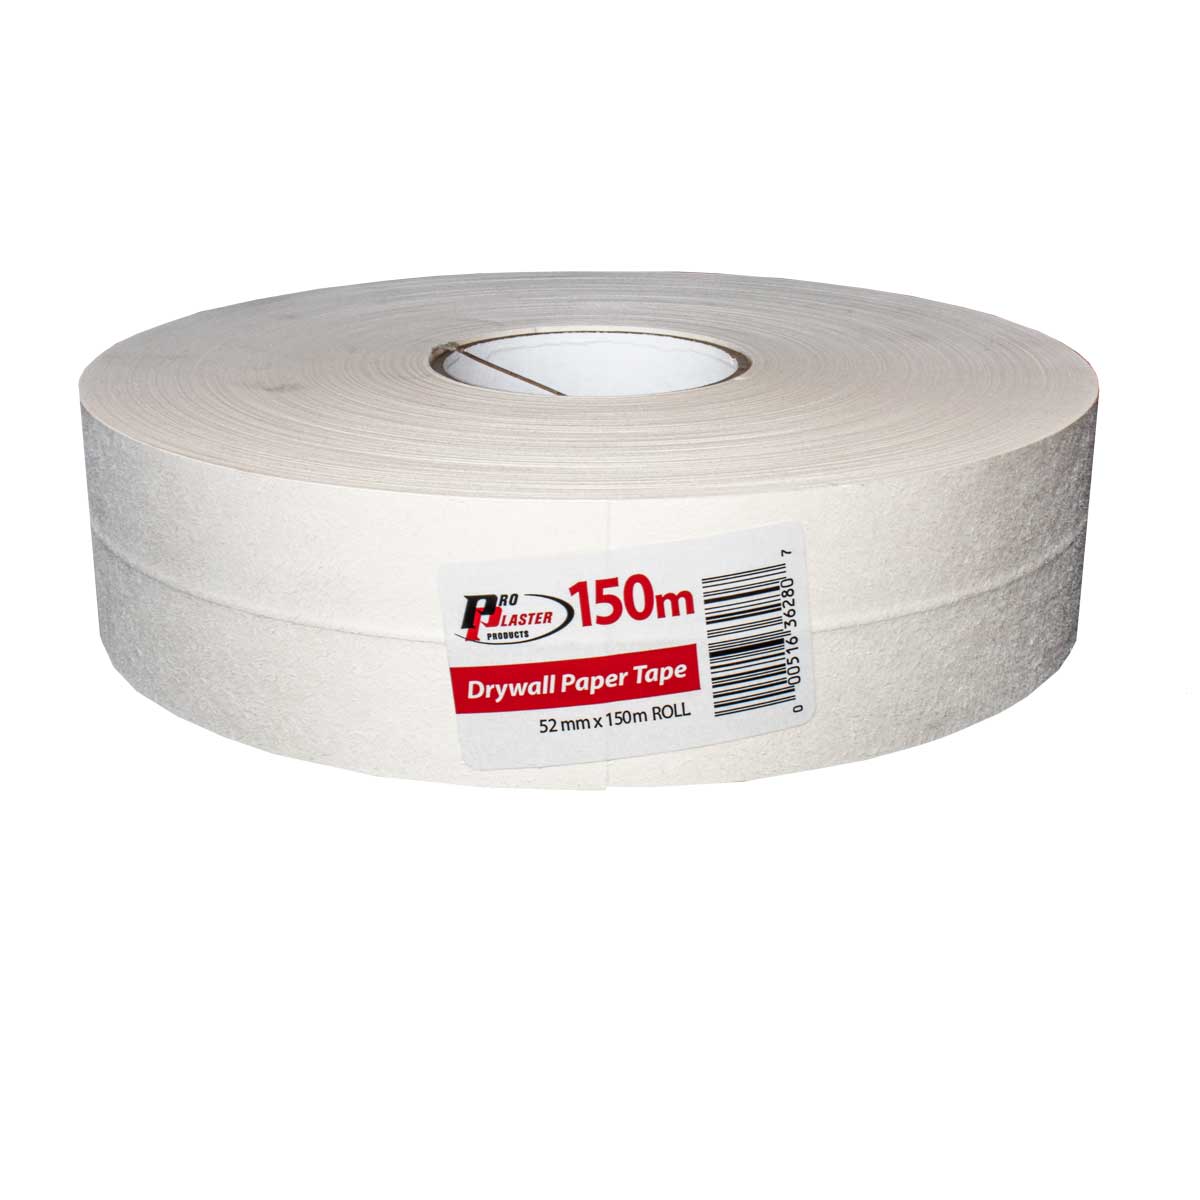 Tape Paper 150m (500') HDP (10B) Pro Plaster